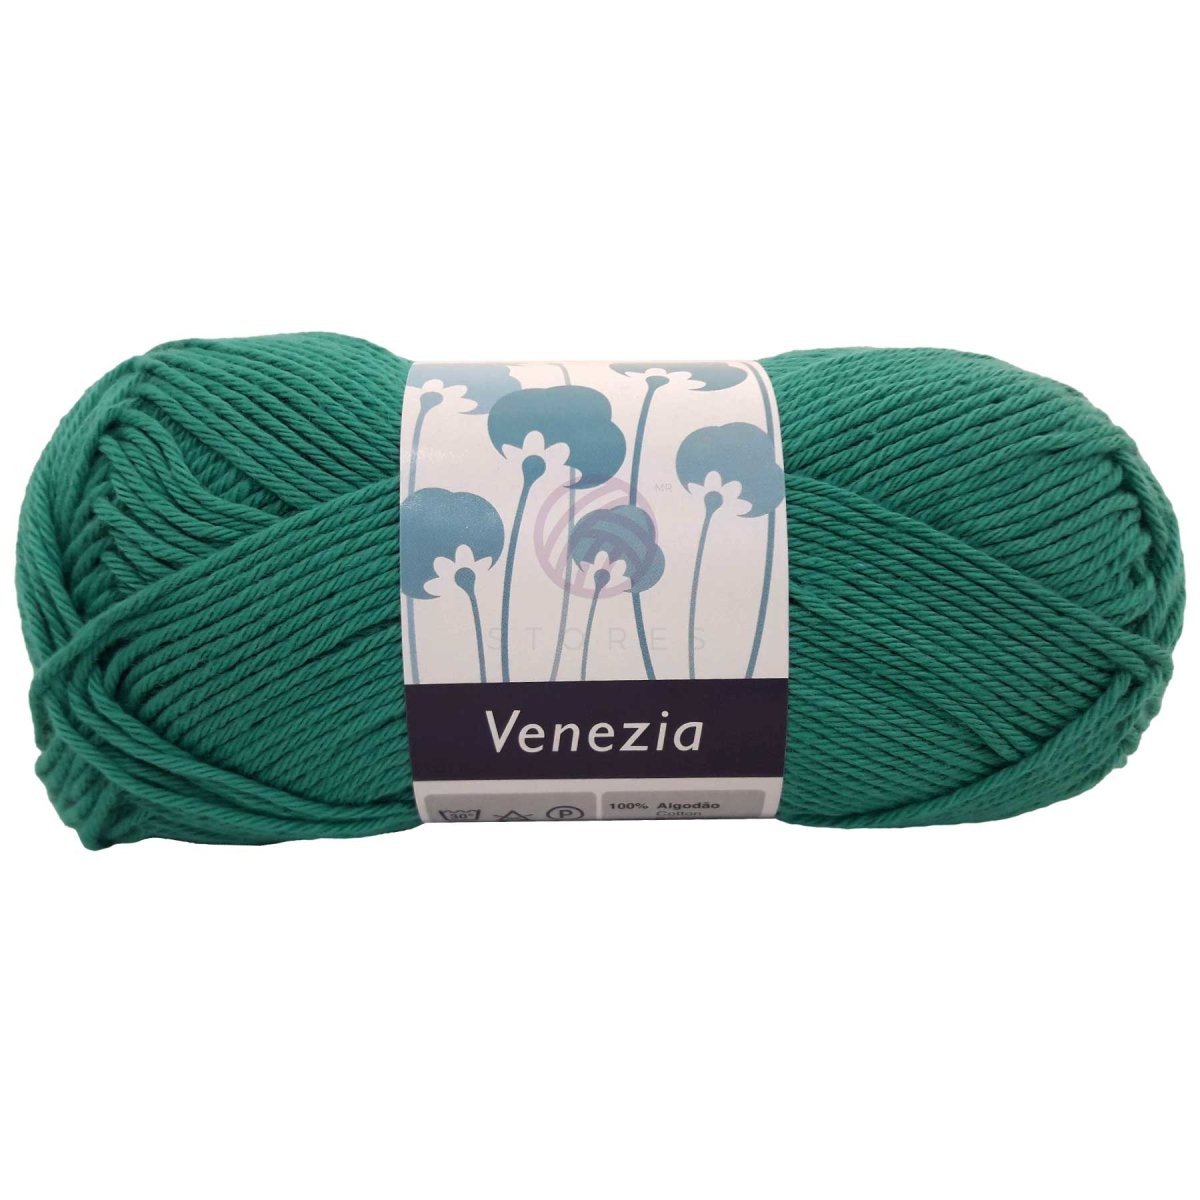 VENEZIA - Crochetstores204-305606850204305